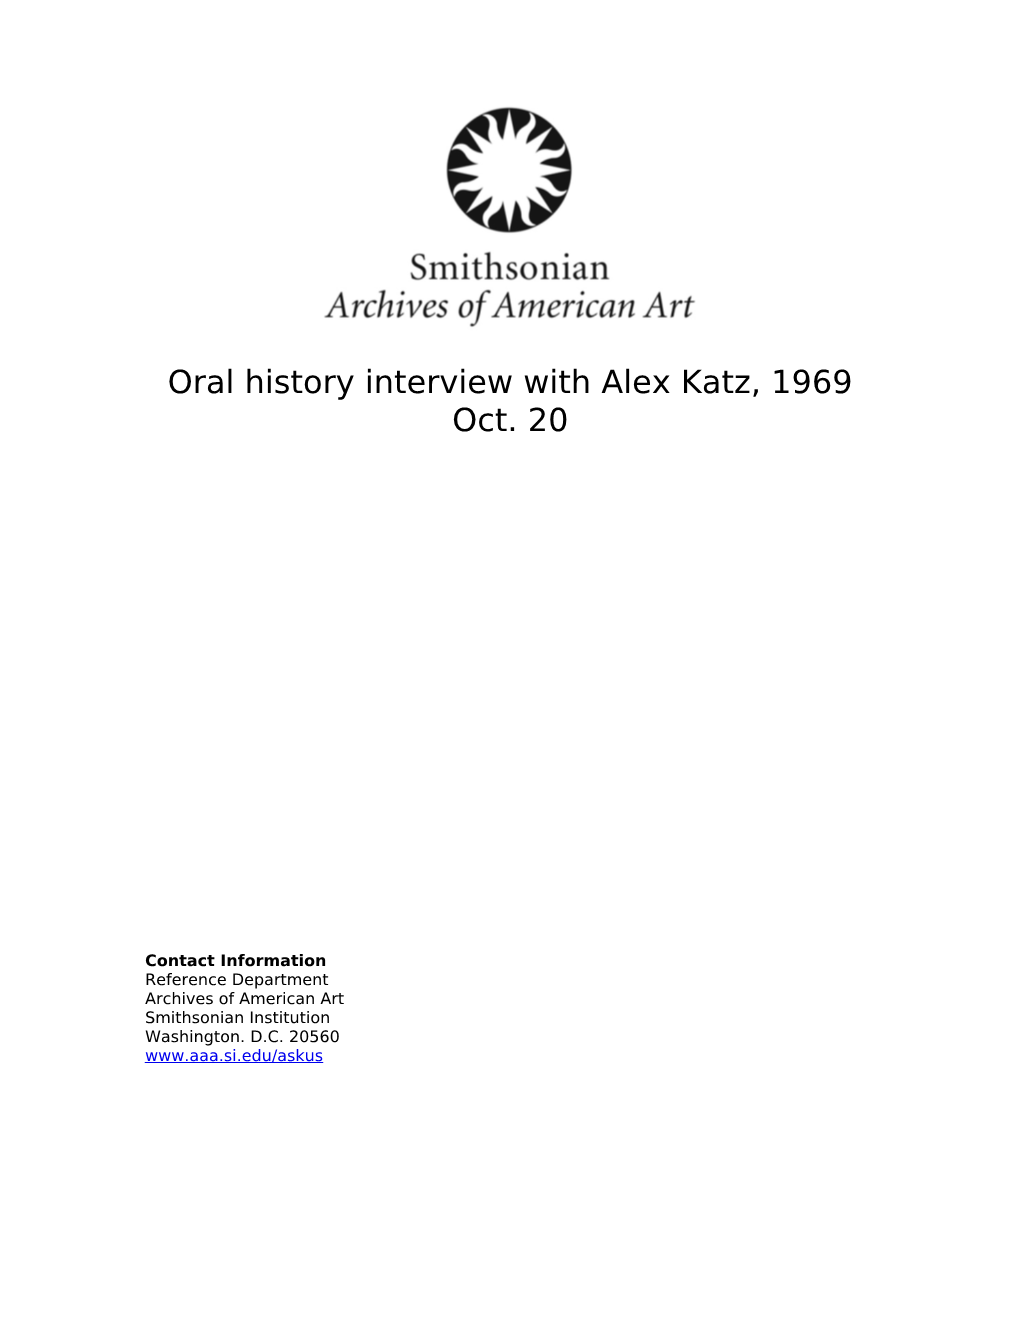 Oral History Interview with Alex Katz, 1969 Oct. 20